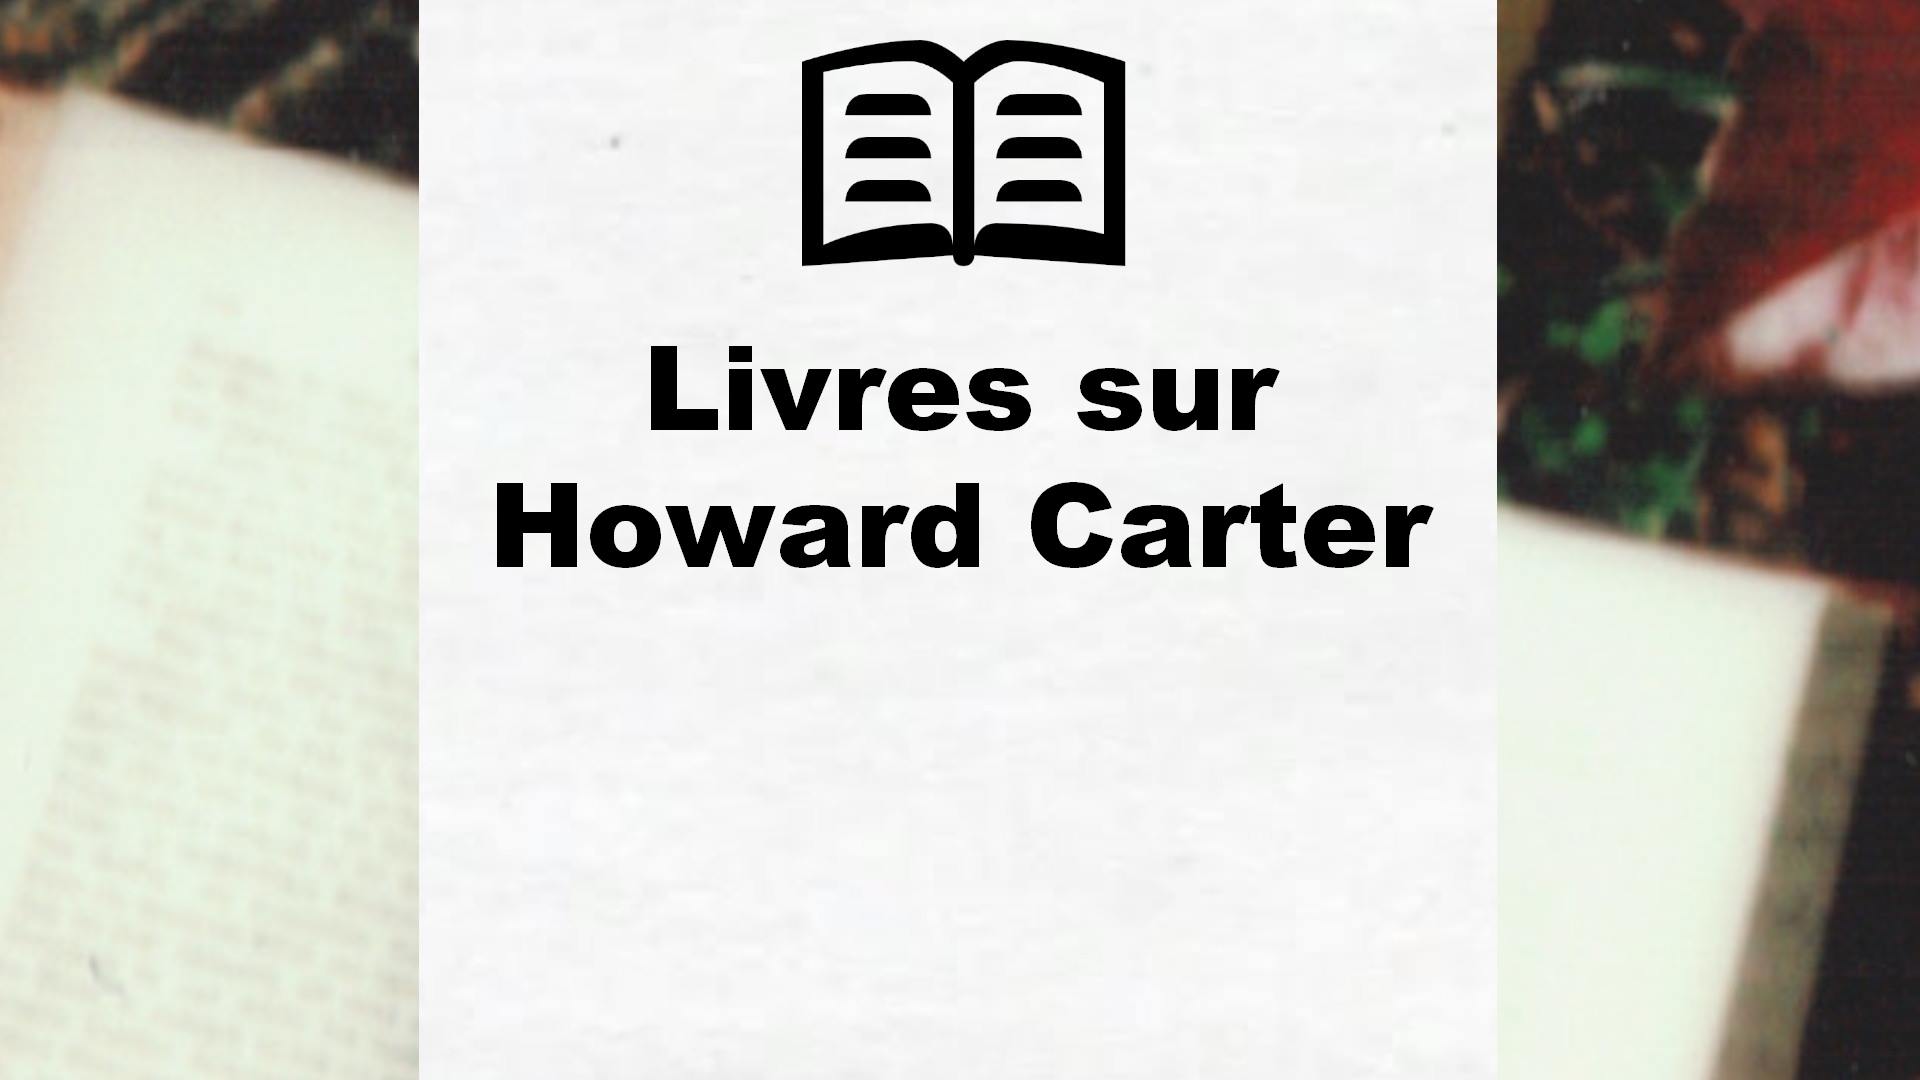 Livres sur Howard Carter